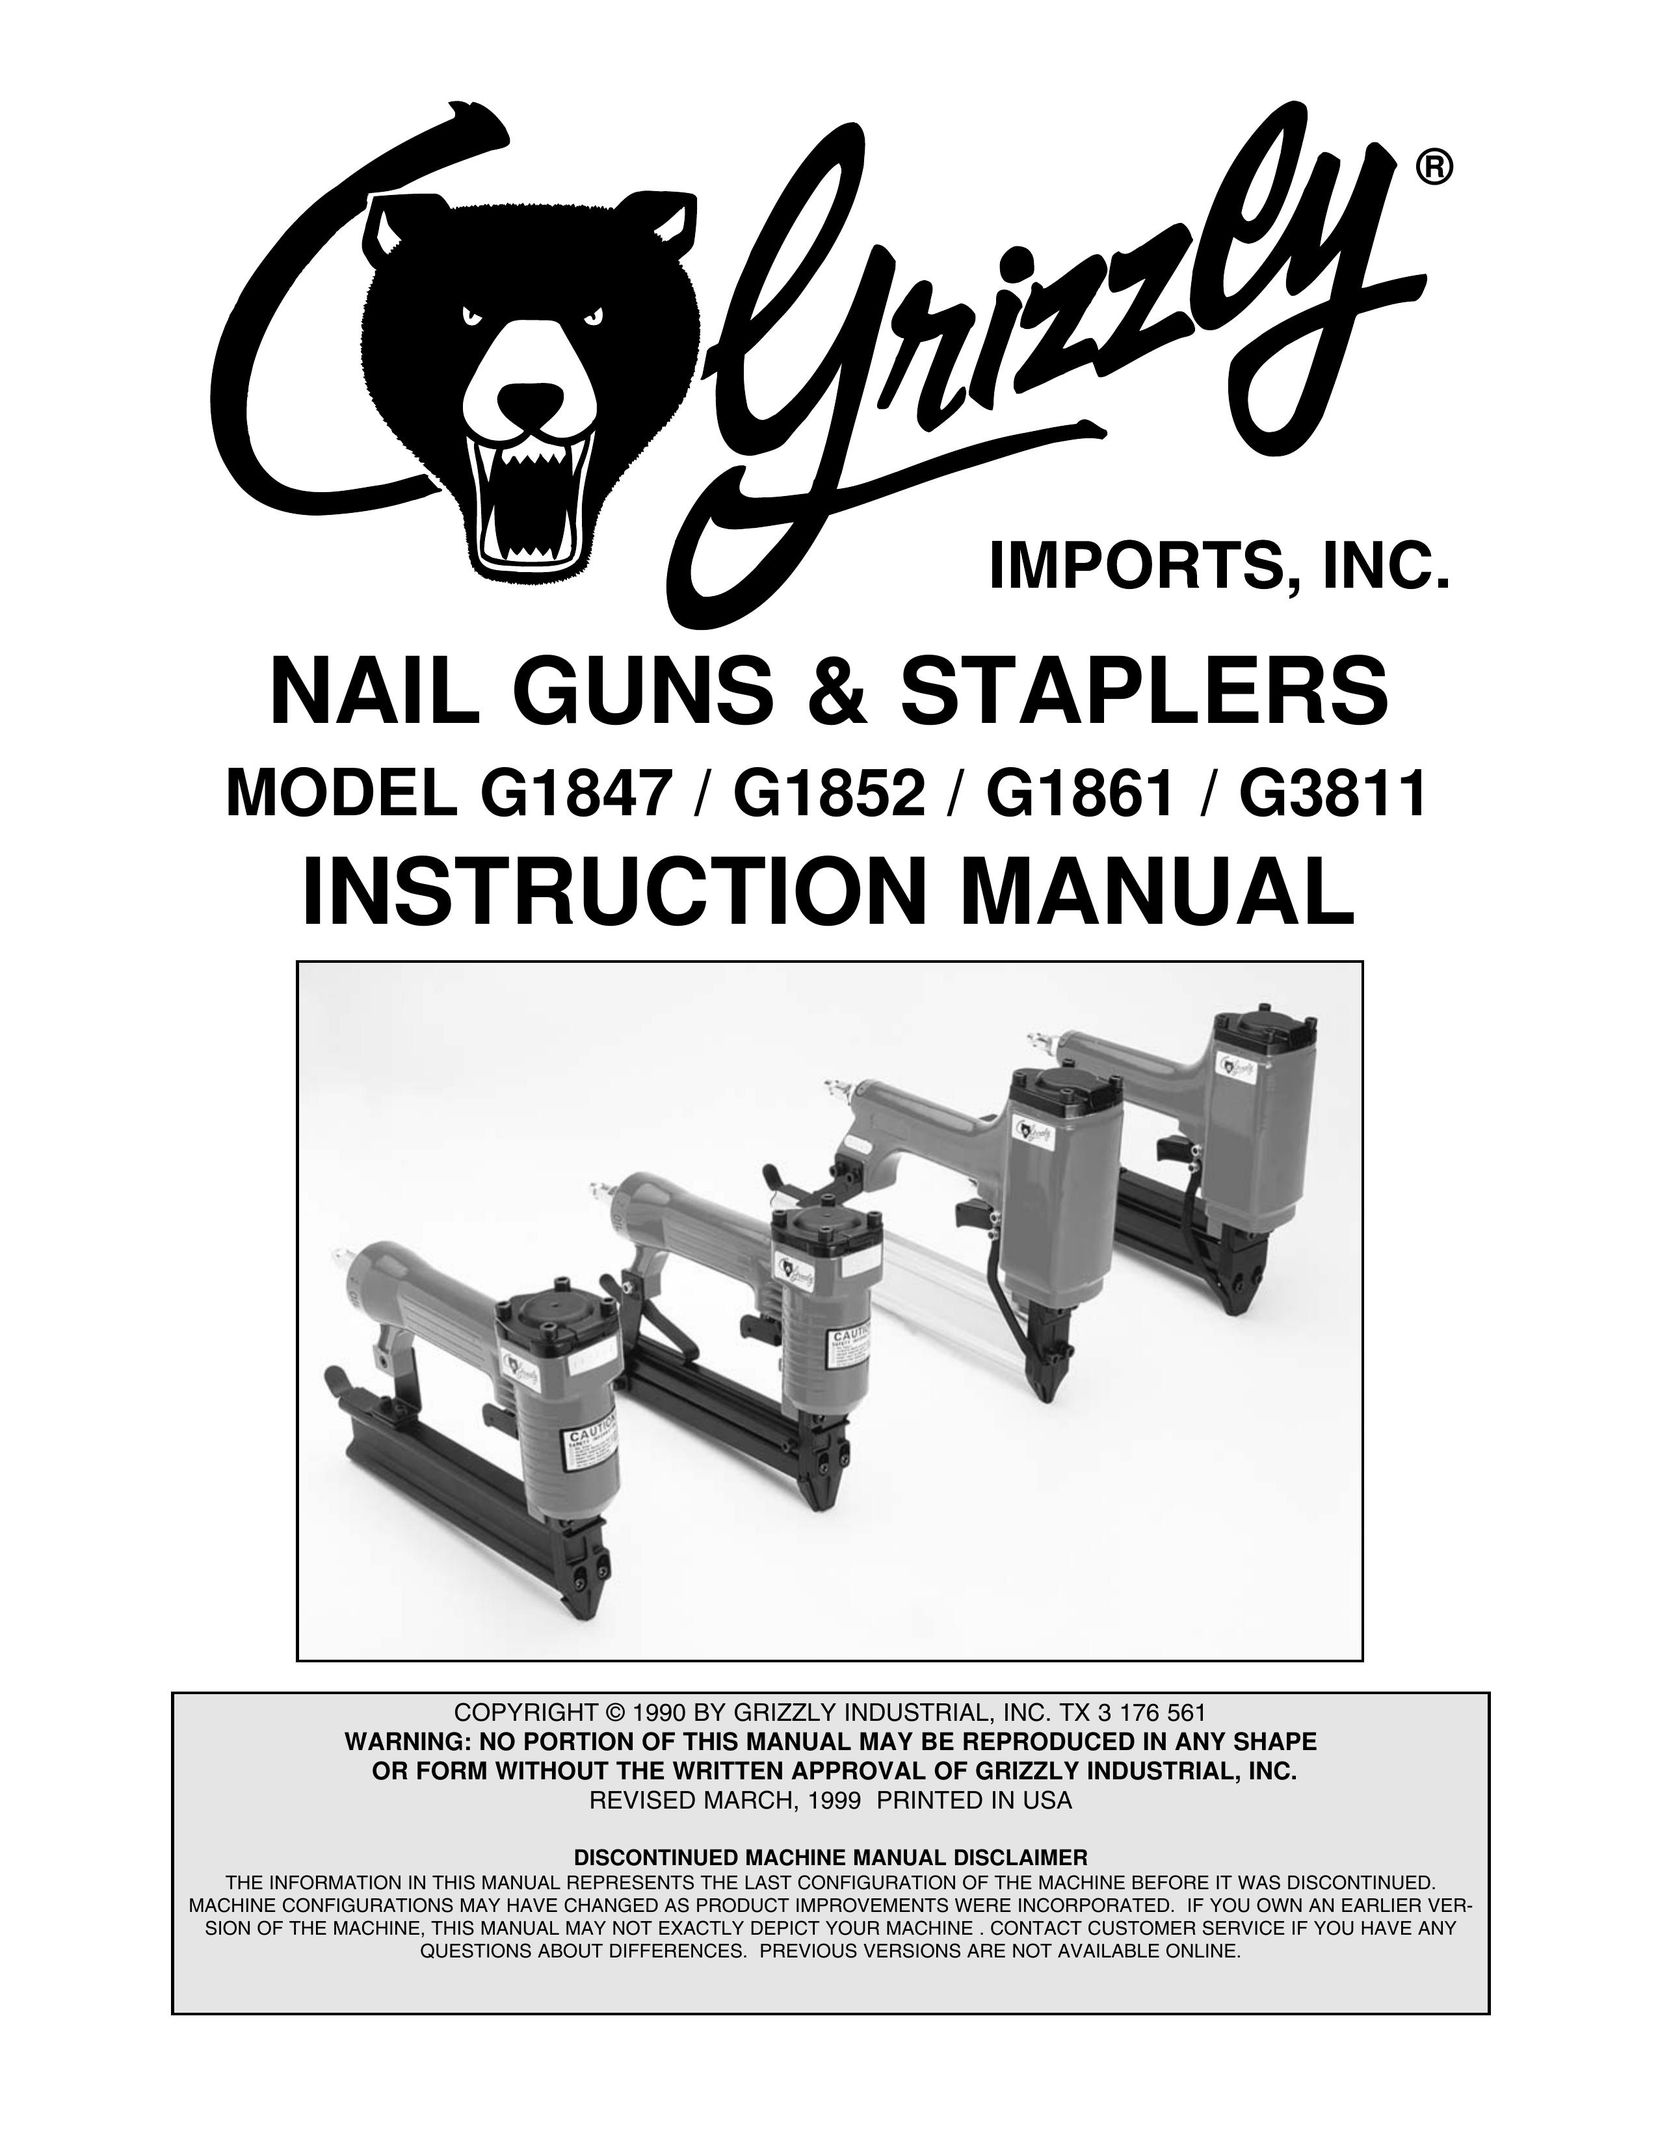 Grizzly G1852 Nail Gun User Manual